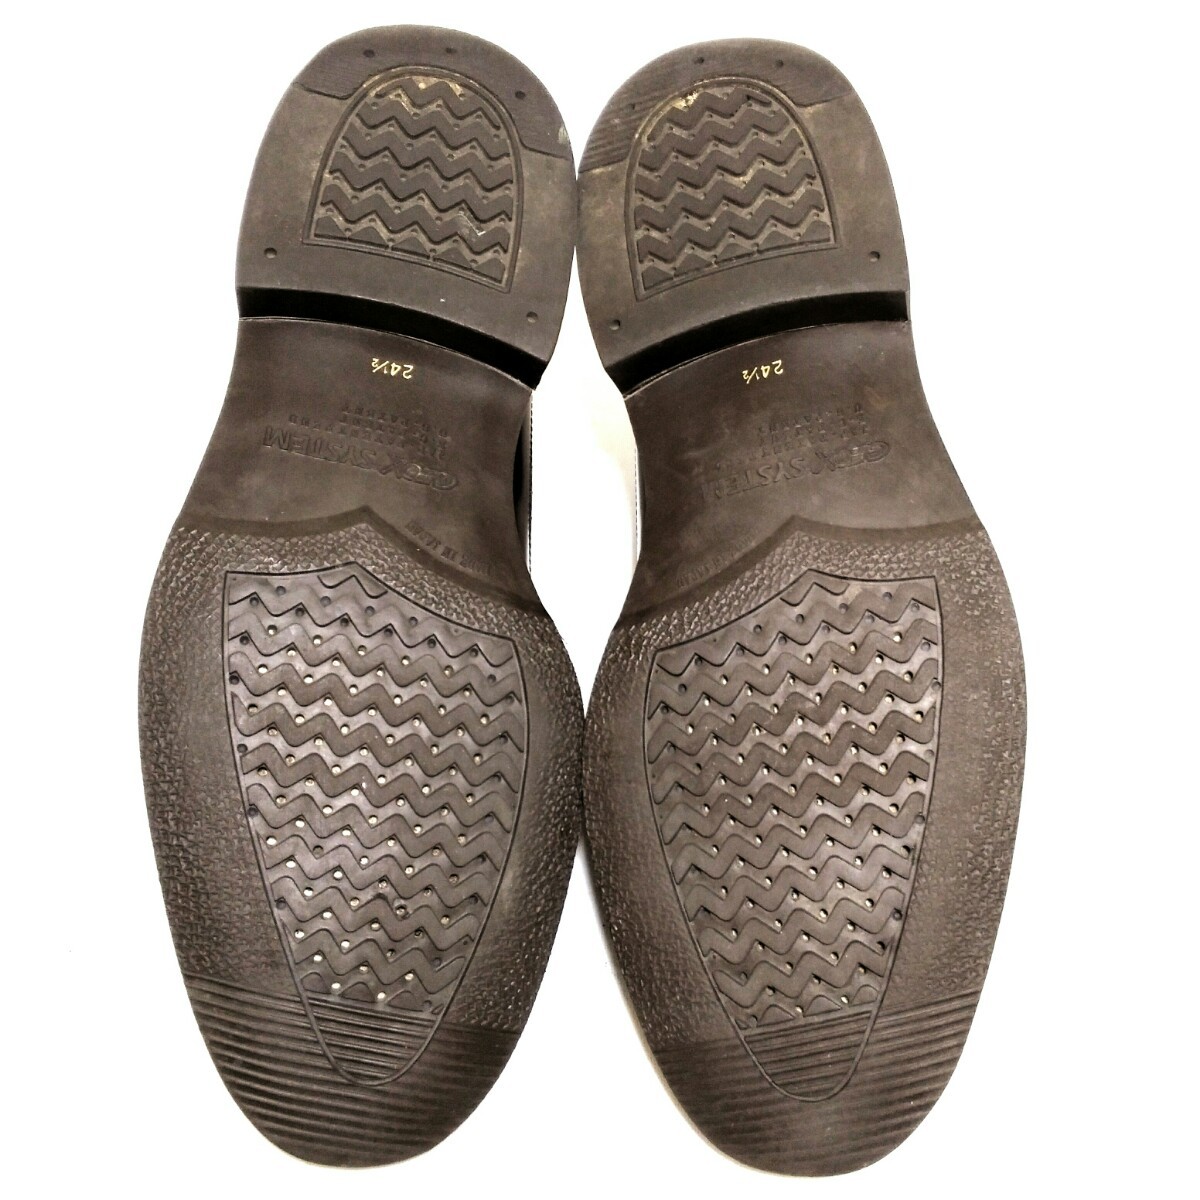 C298【REGAL】リーガル フルブローグ  24.5cm W218 ダークブラウン 革靴 紳士靴 メンズ レザーシューズ GEOX ジェオックスの画像7